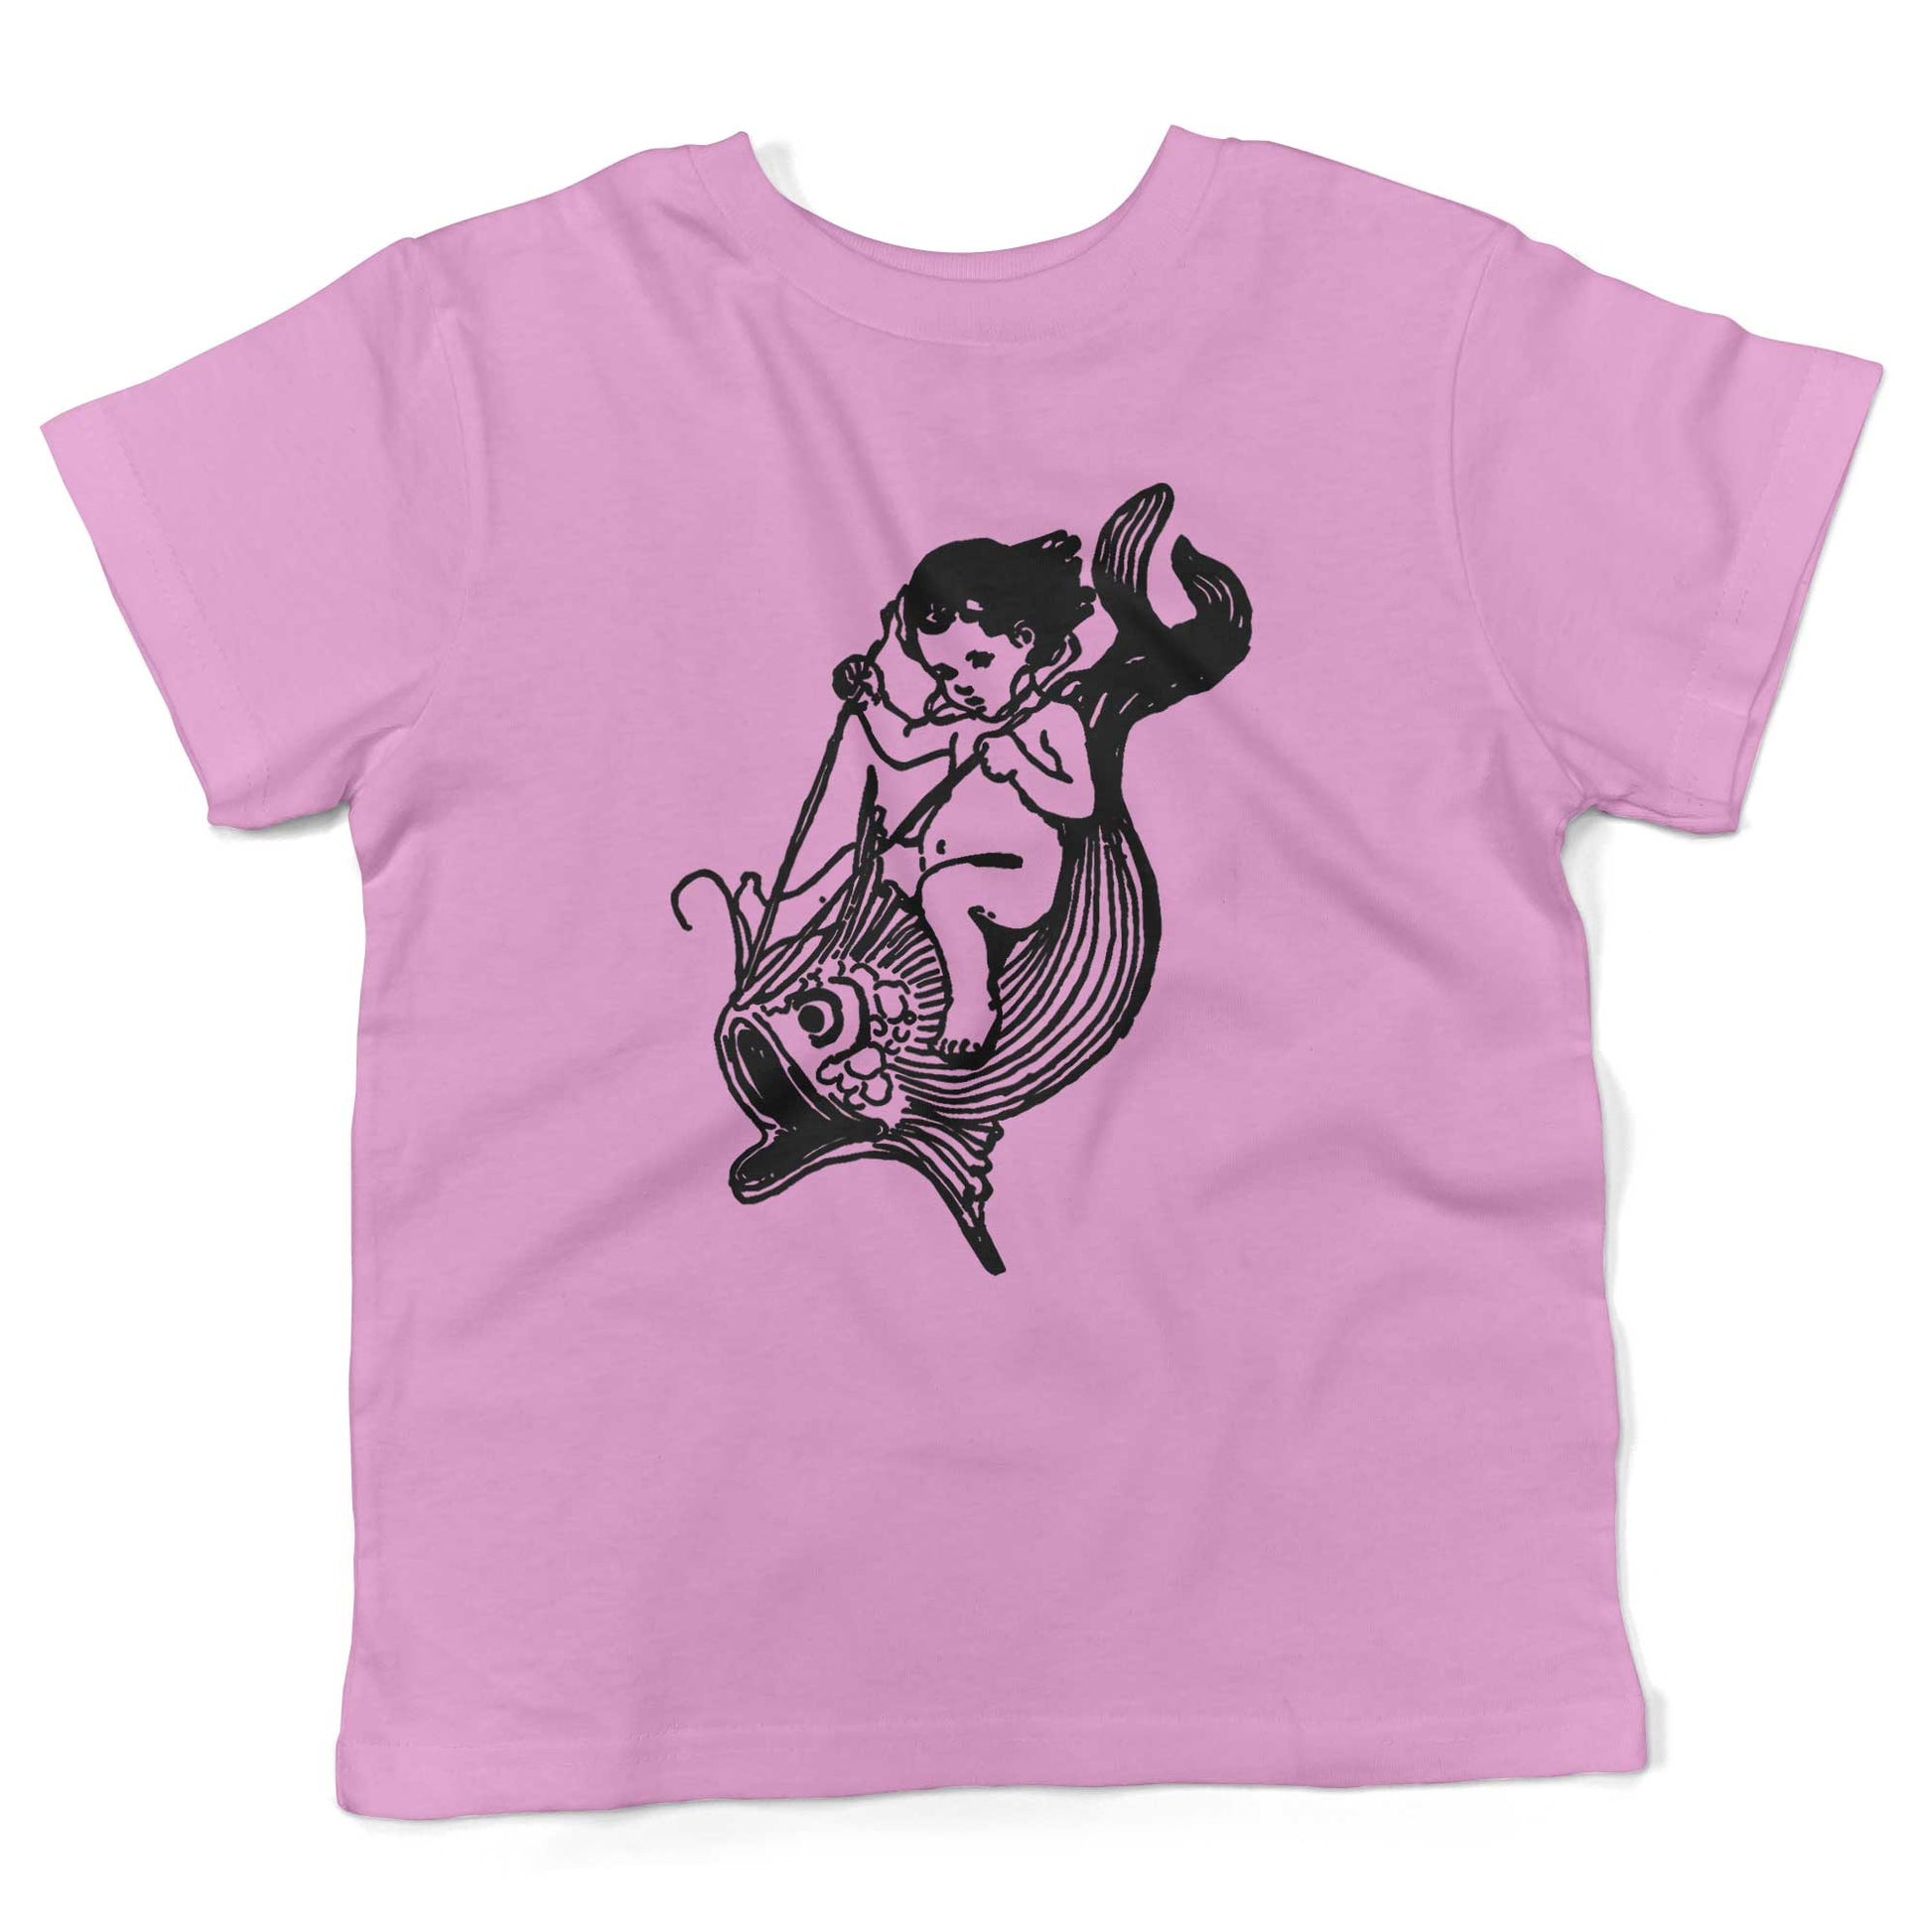 Water Baby Riding A Giant Fish Toddler Shirt-Organic Pink-2T